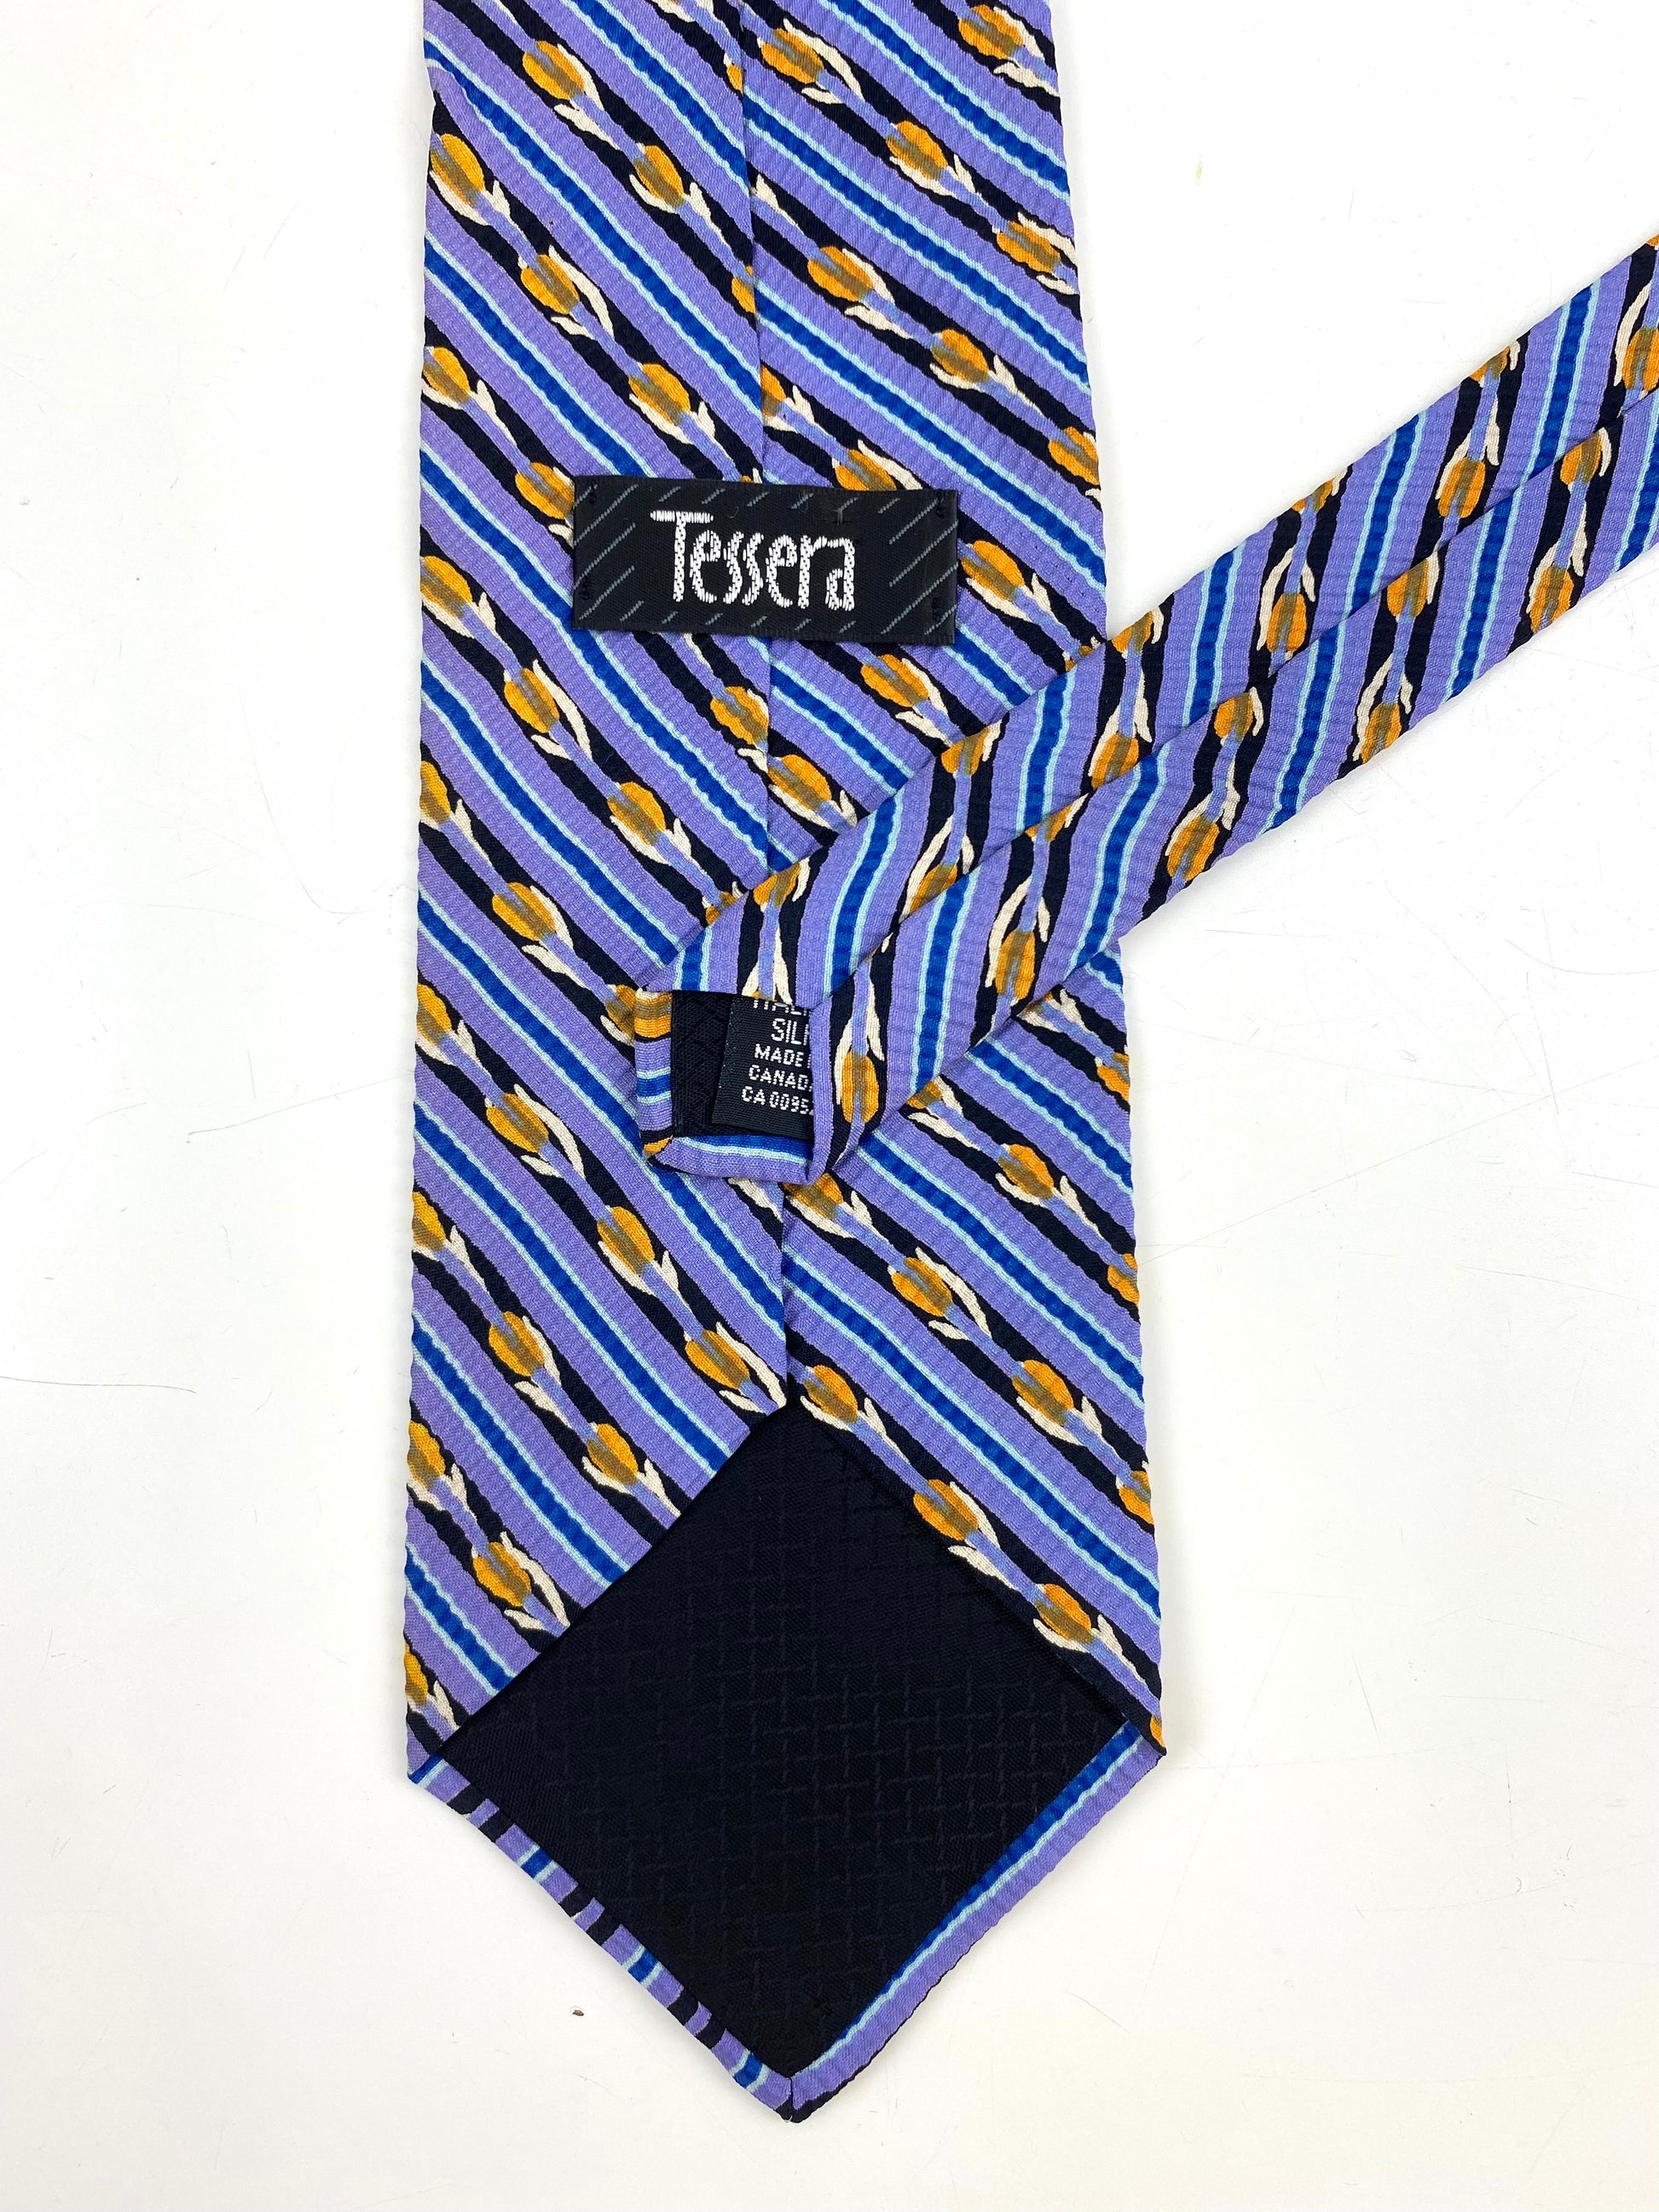 90s Deadstock Silk Necktie, Men's Vintage Purple/ Yellow Floral Diagonal Stripe Pattern Tie, NOS